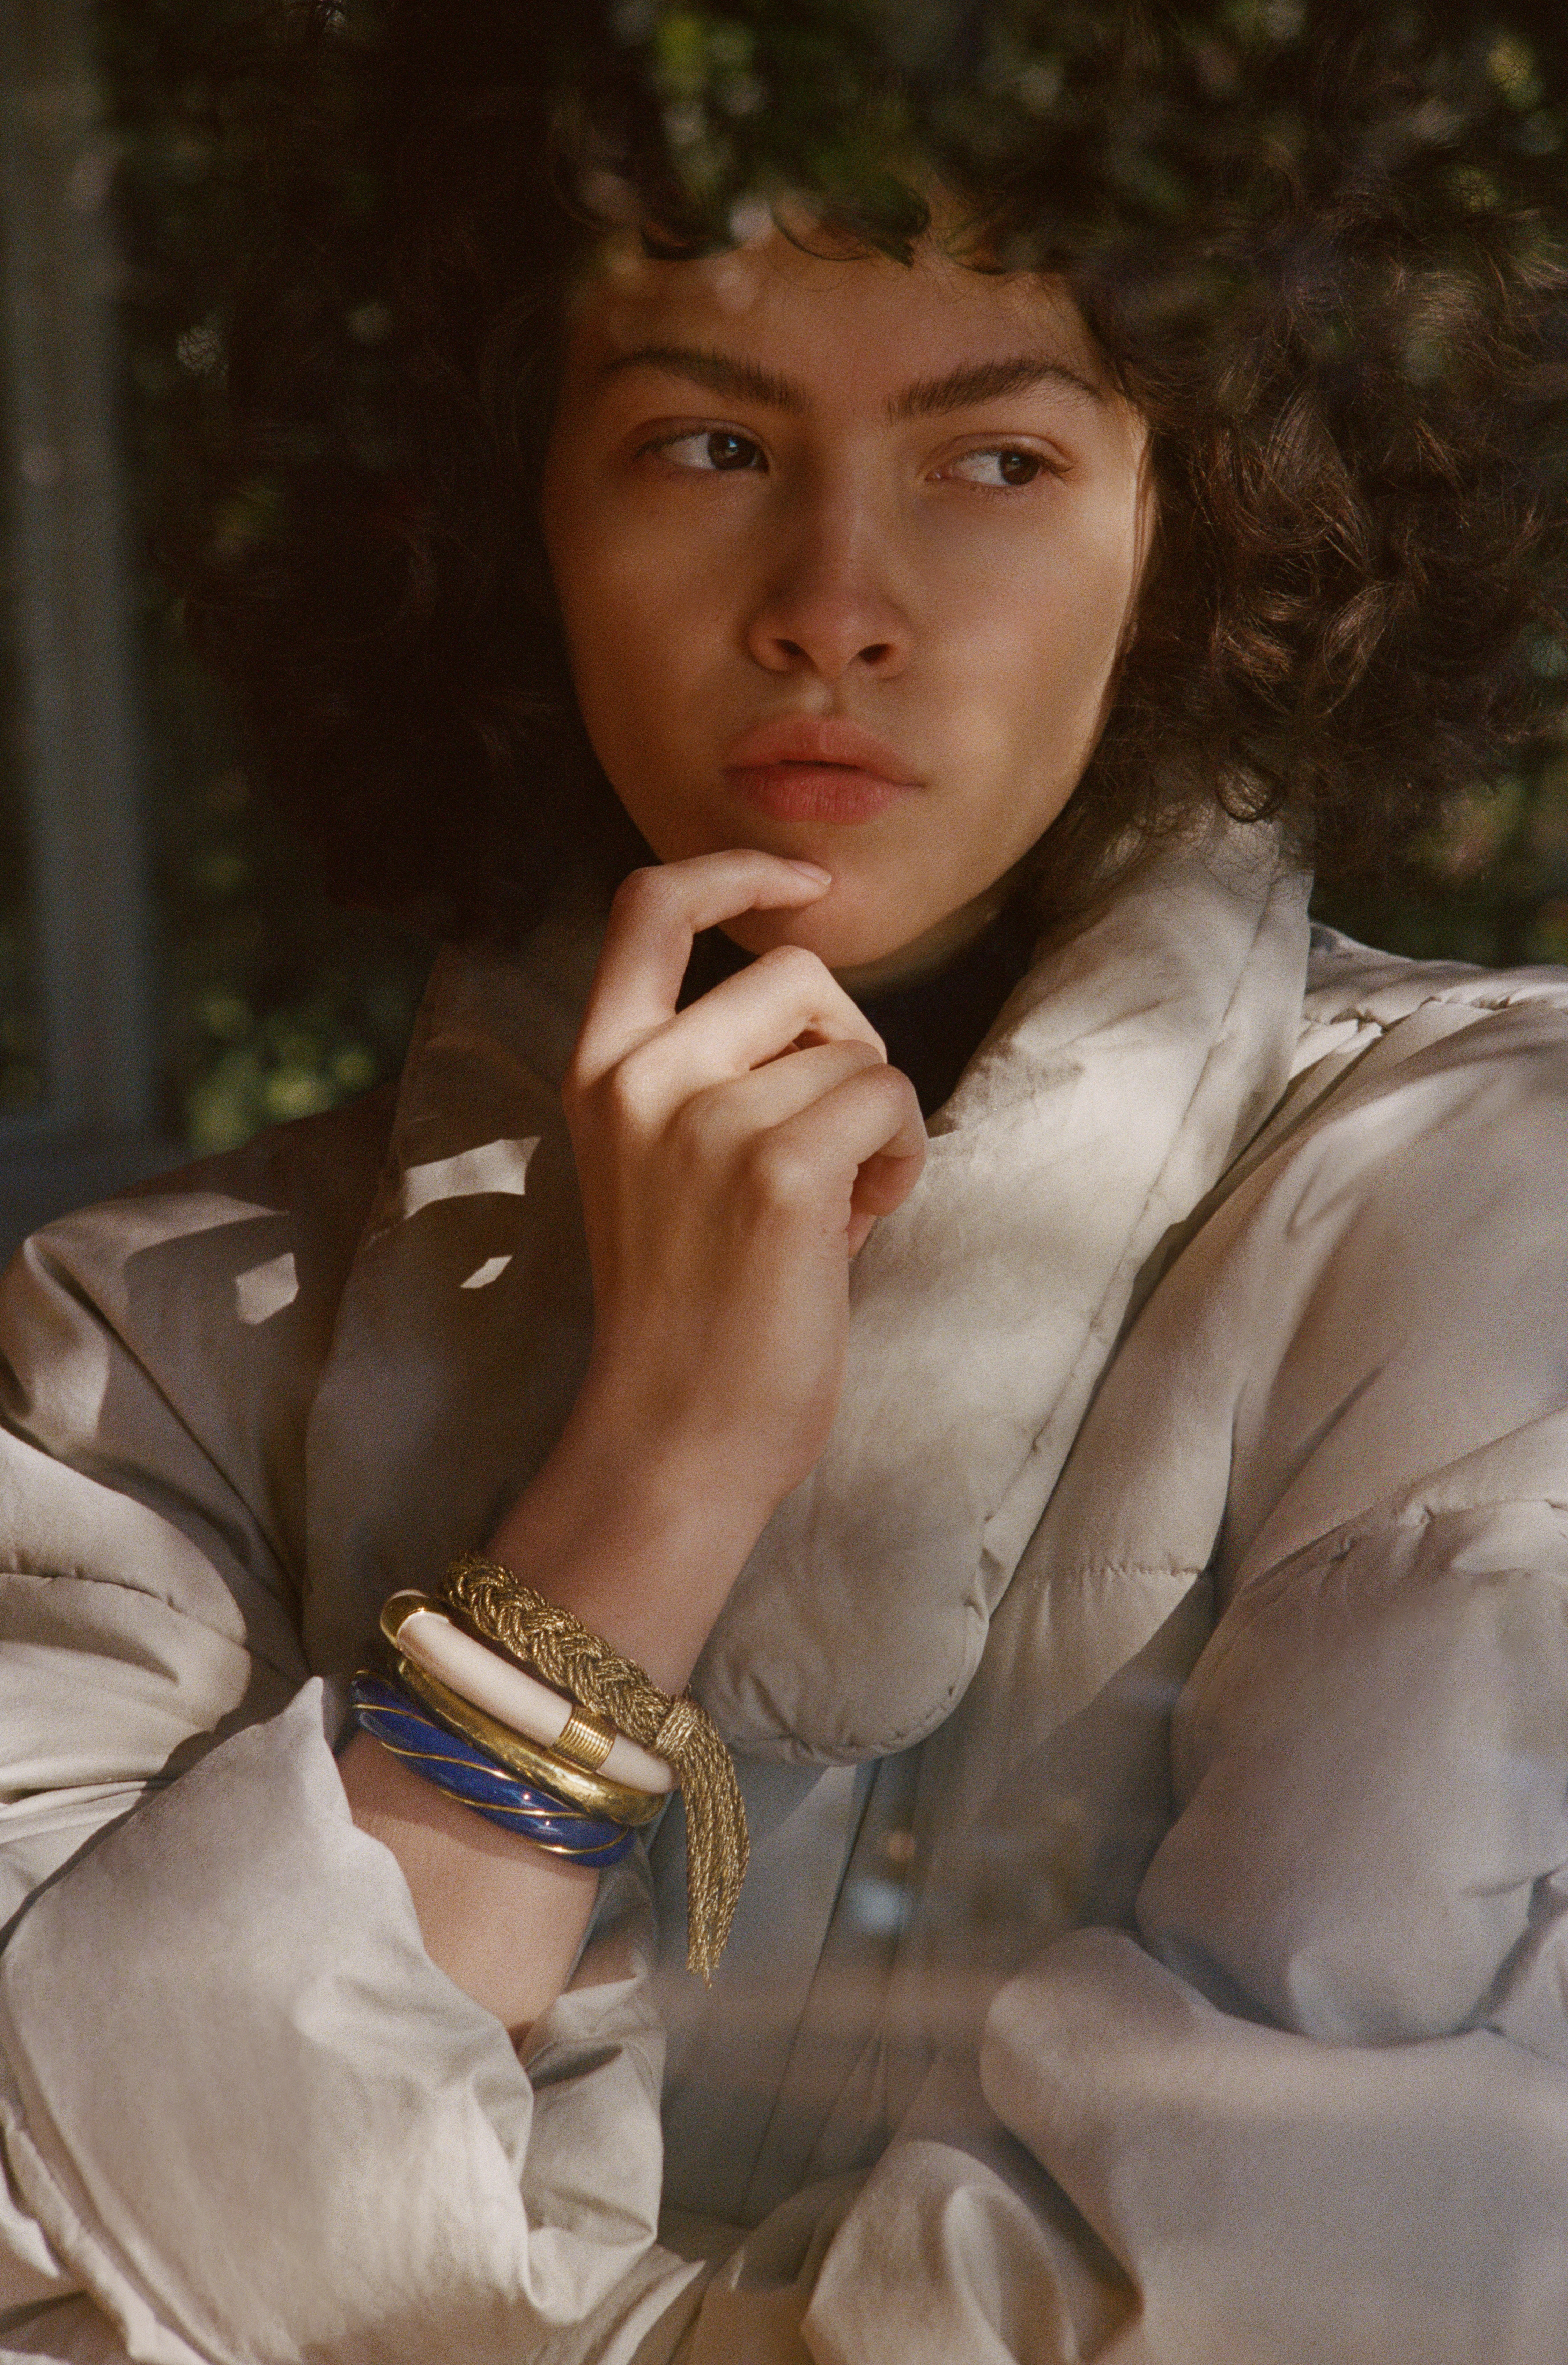 Diana resin and gold plated twisted bangle bracelet - Aurélie Bidermann